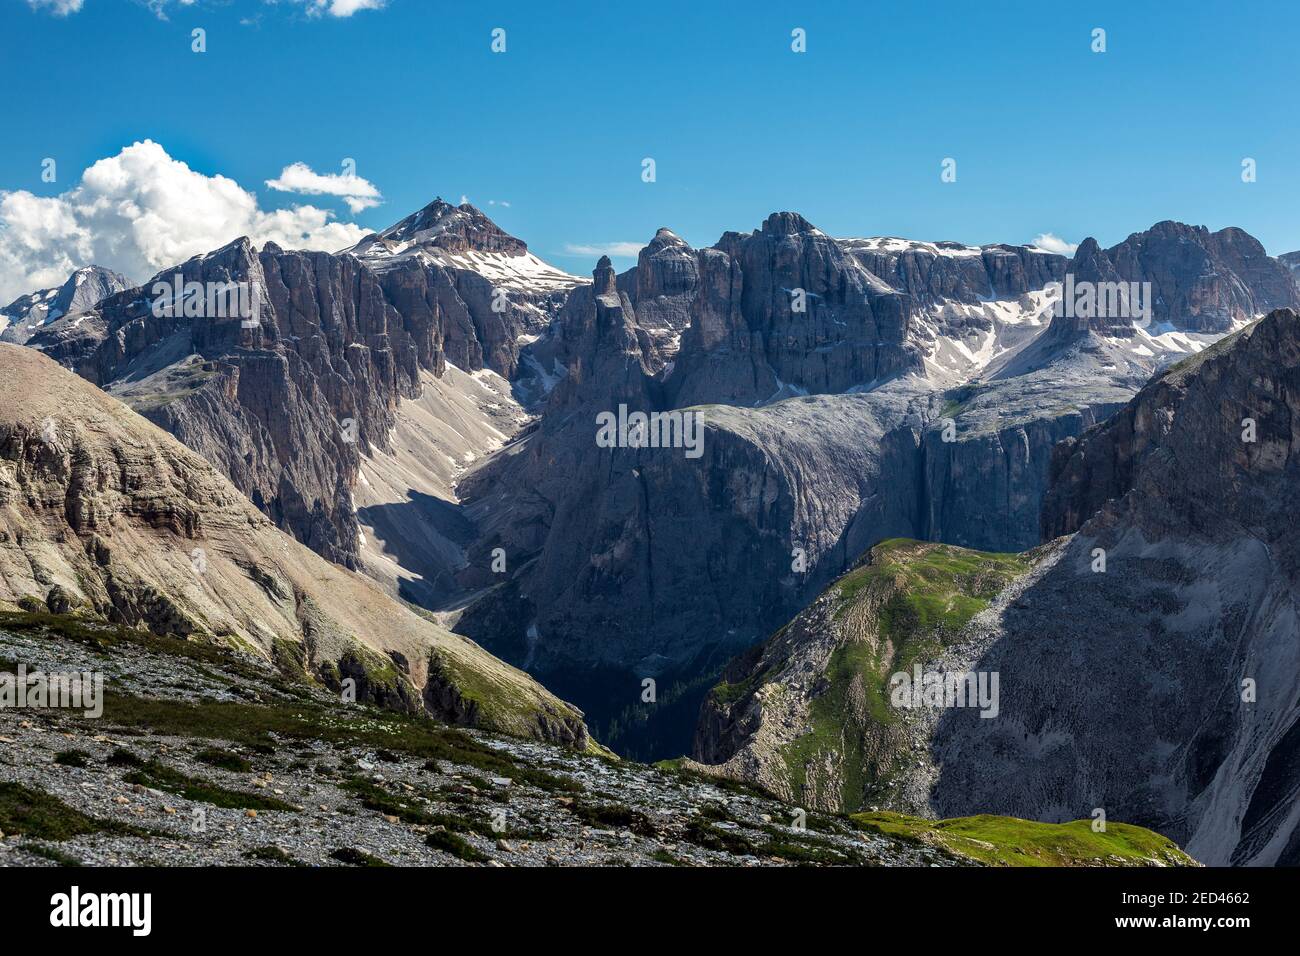 View on the Sella mountain group (Val Mezdì rocky valley and Piz Boè peak). Taken from Puez plateau. The Gardena Dolomites. Italian Alps. Europe. Stock Photo